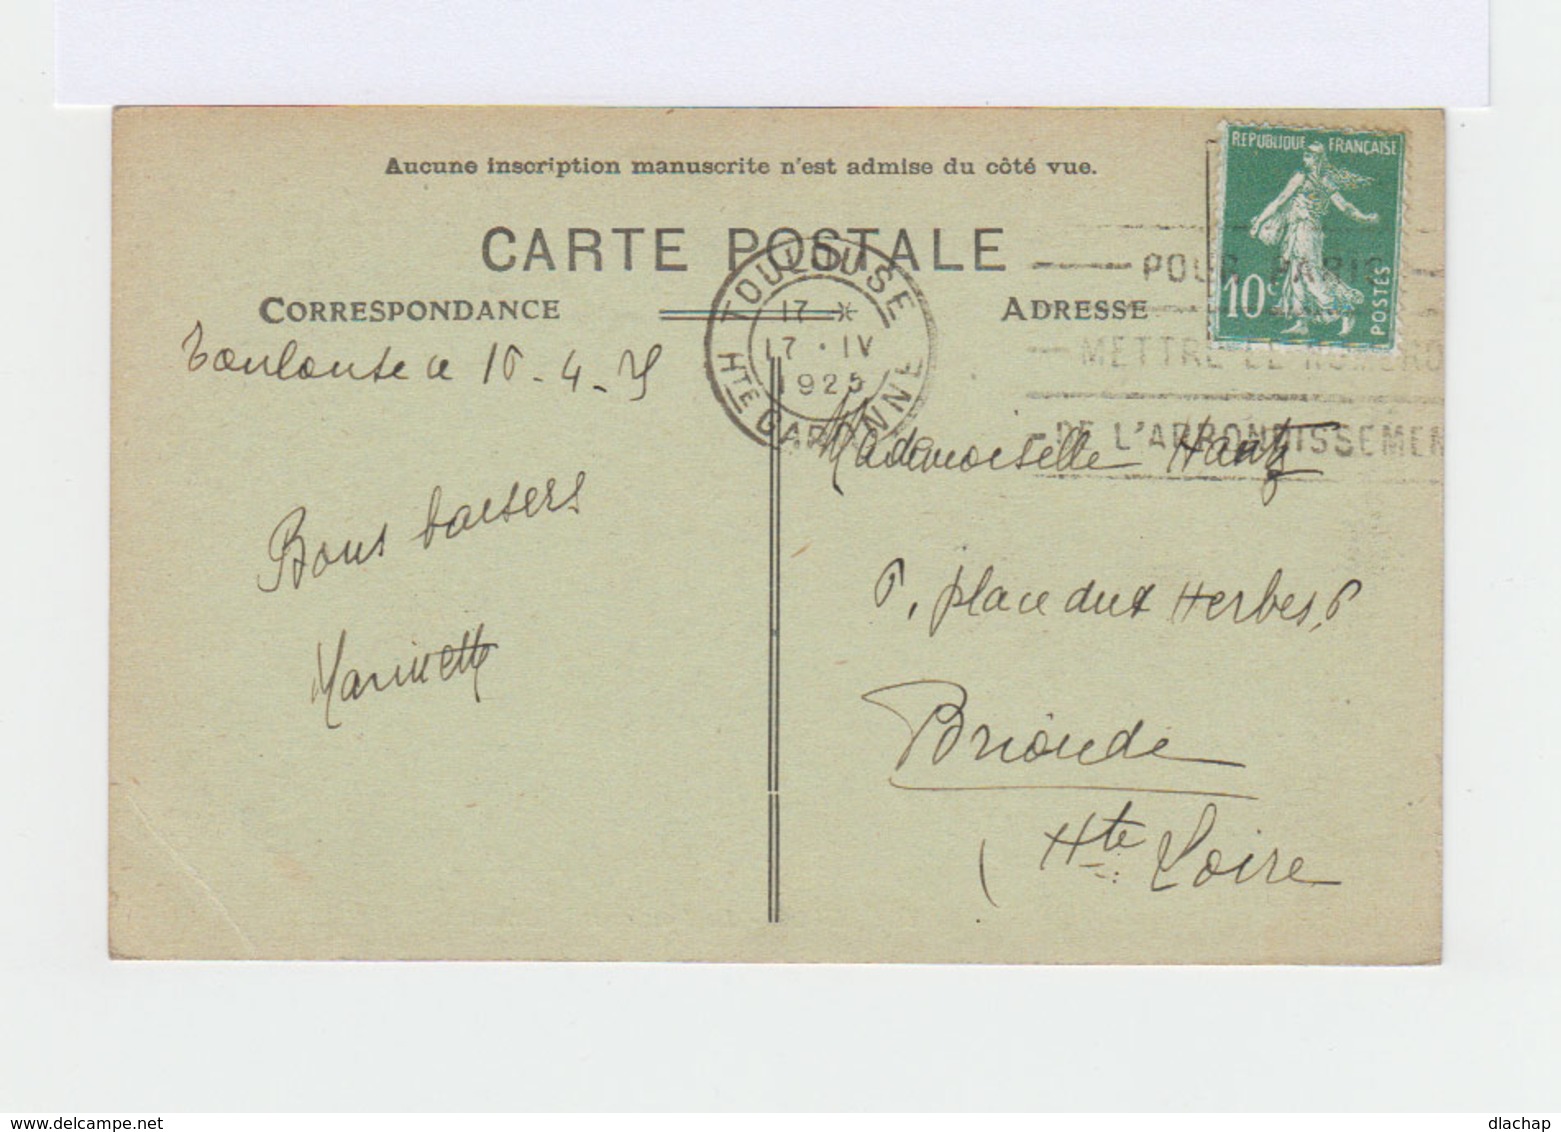 Toulouse. Le Boulevard Carnot. Tramway, Attelages, Terrasse Café. CAD Toulouse 1925. (3200) - Toulouse